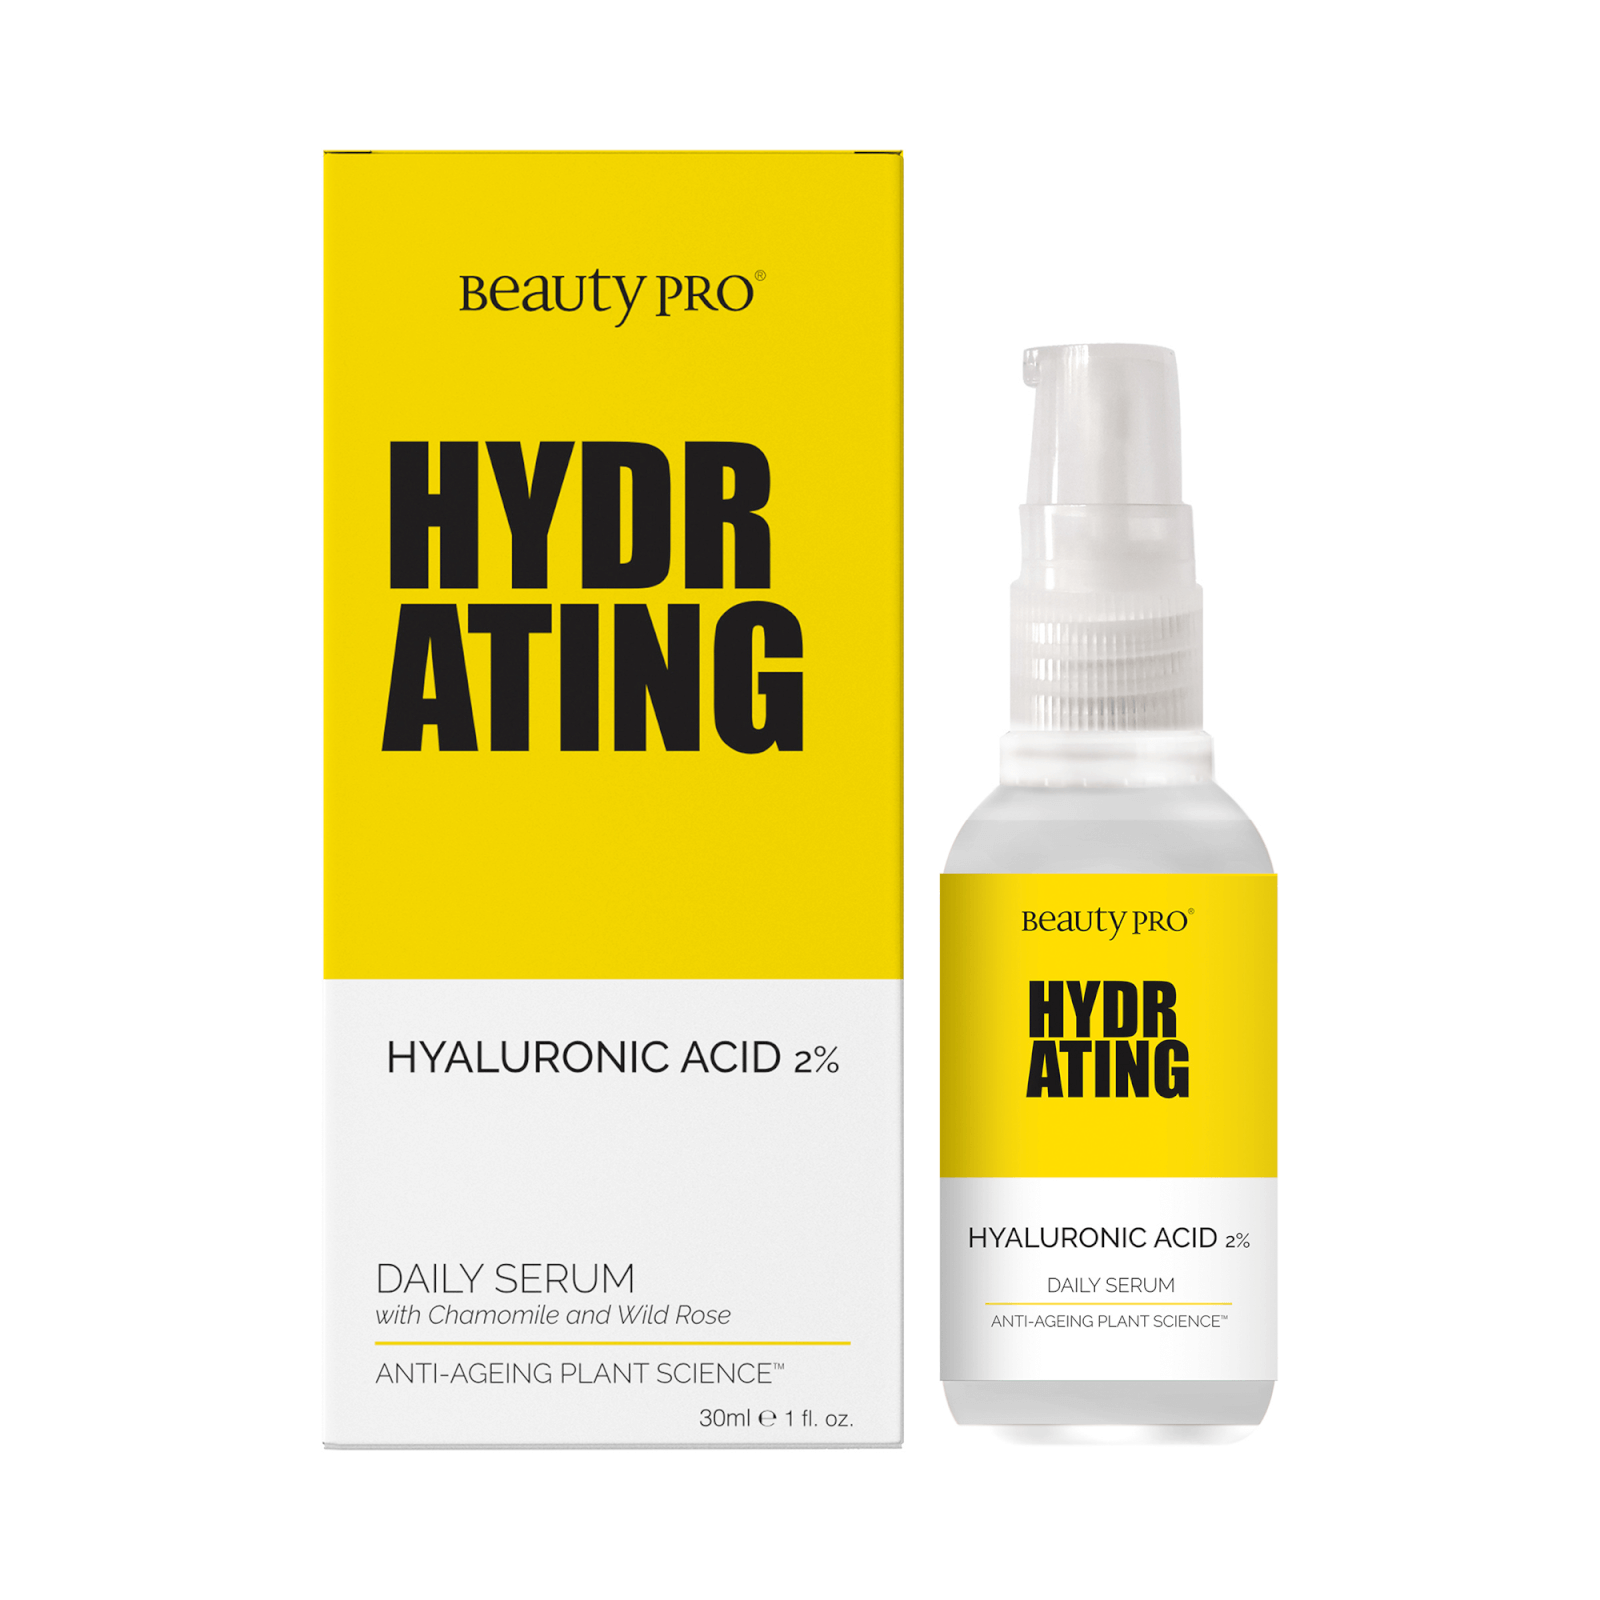 BeautyPro Hydrating 2% Hyaluronic Acid Daily Serum 30ml lookfantastic.com imagine